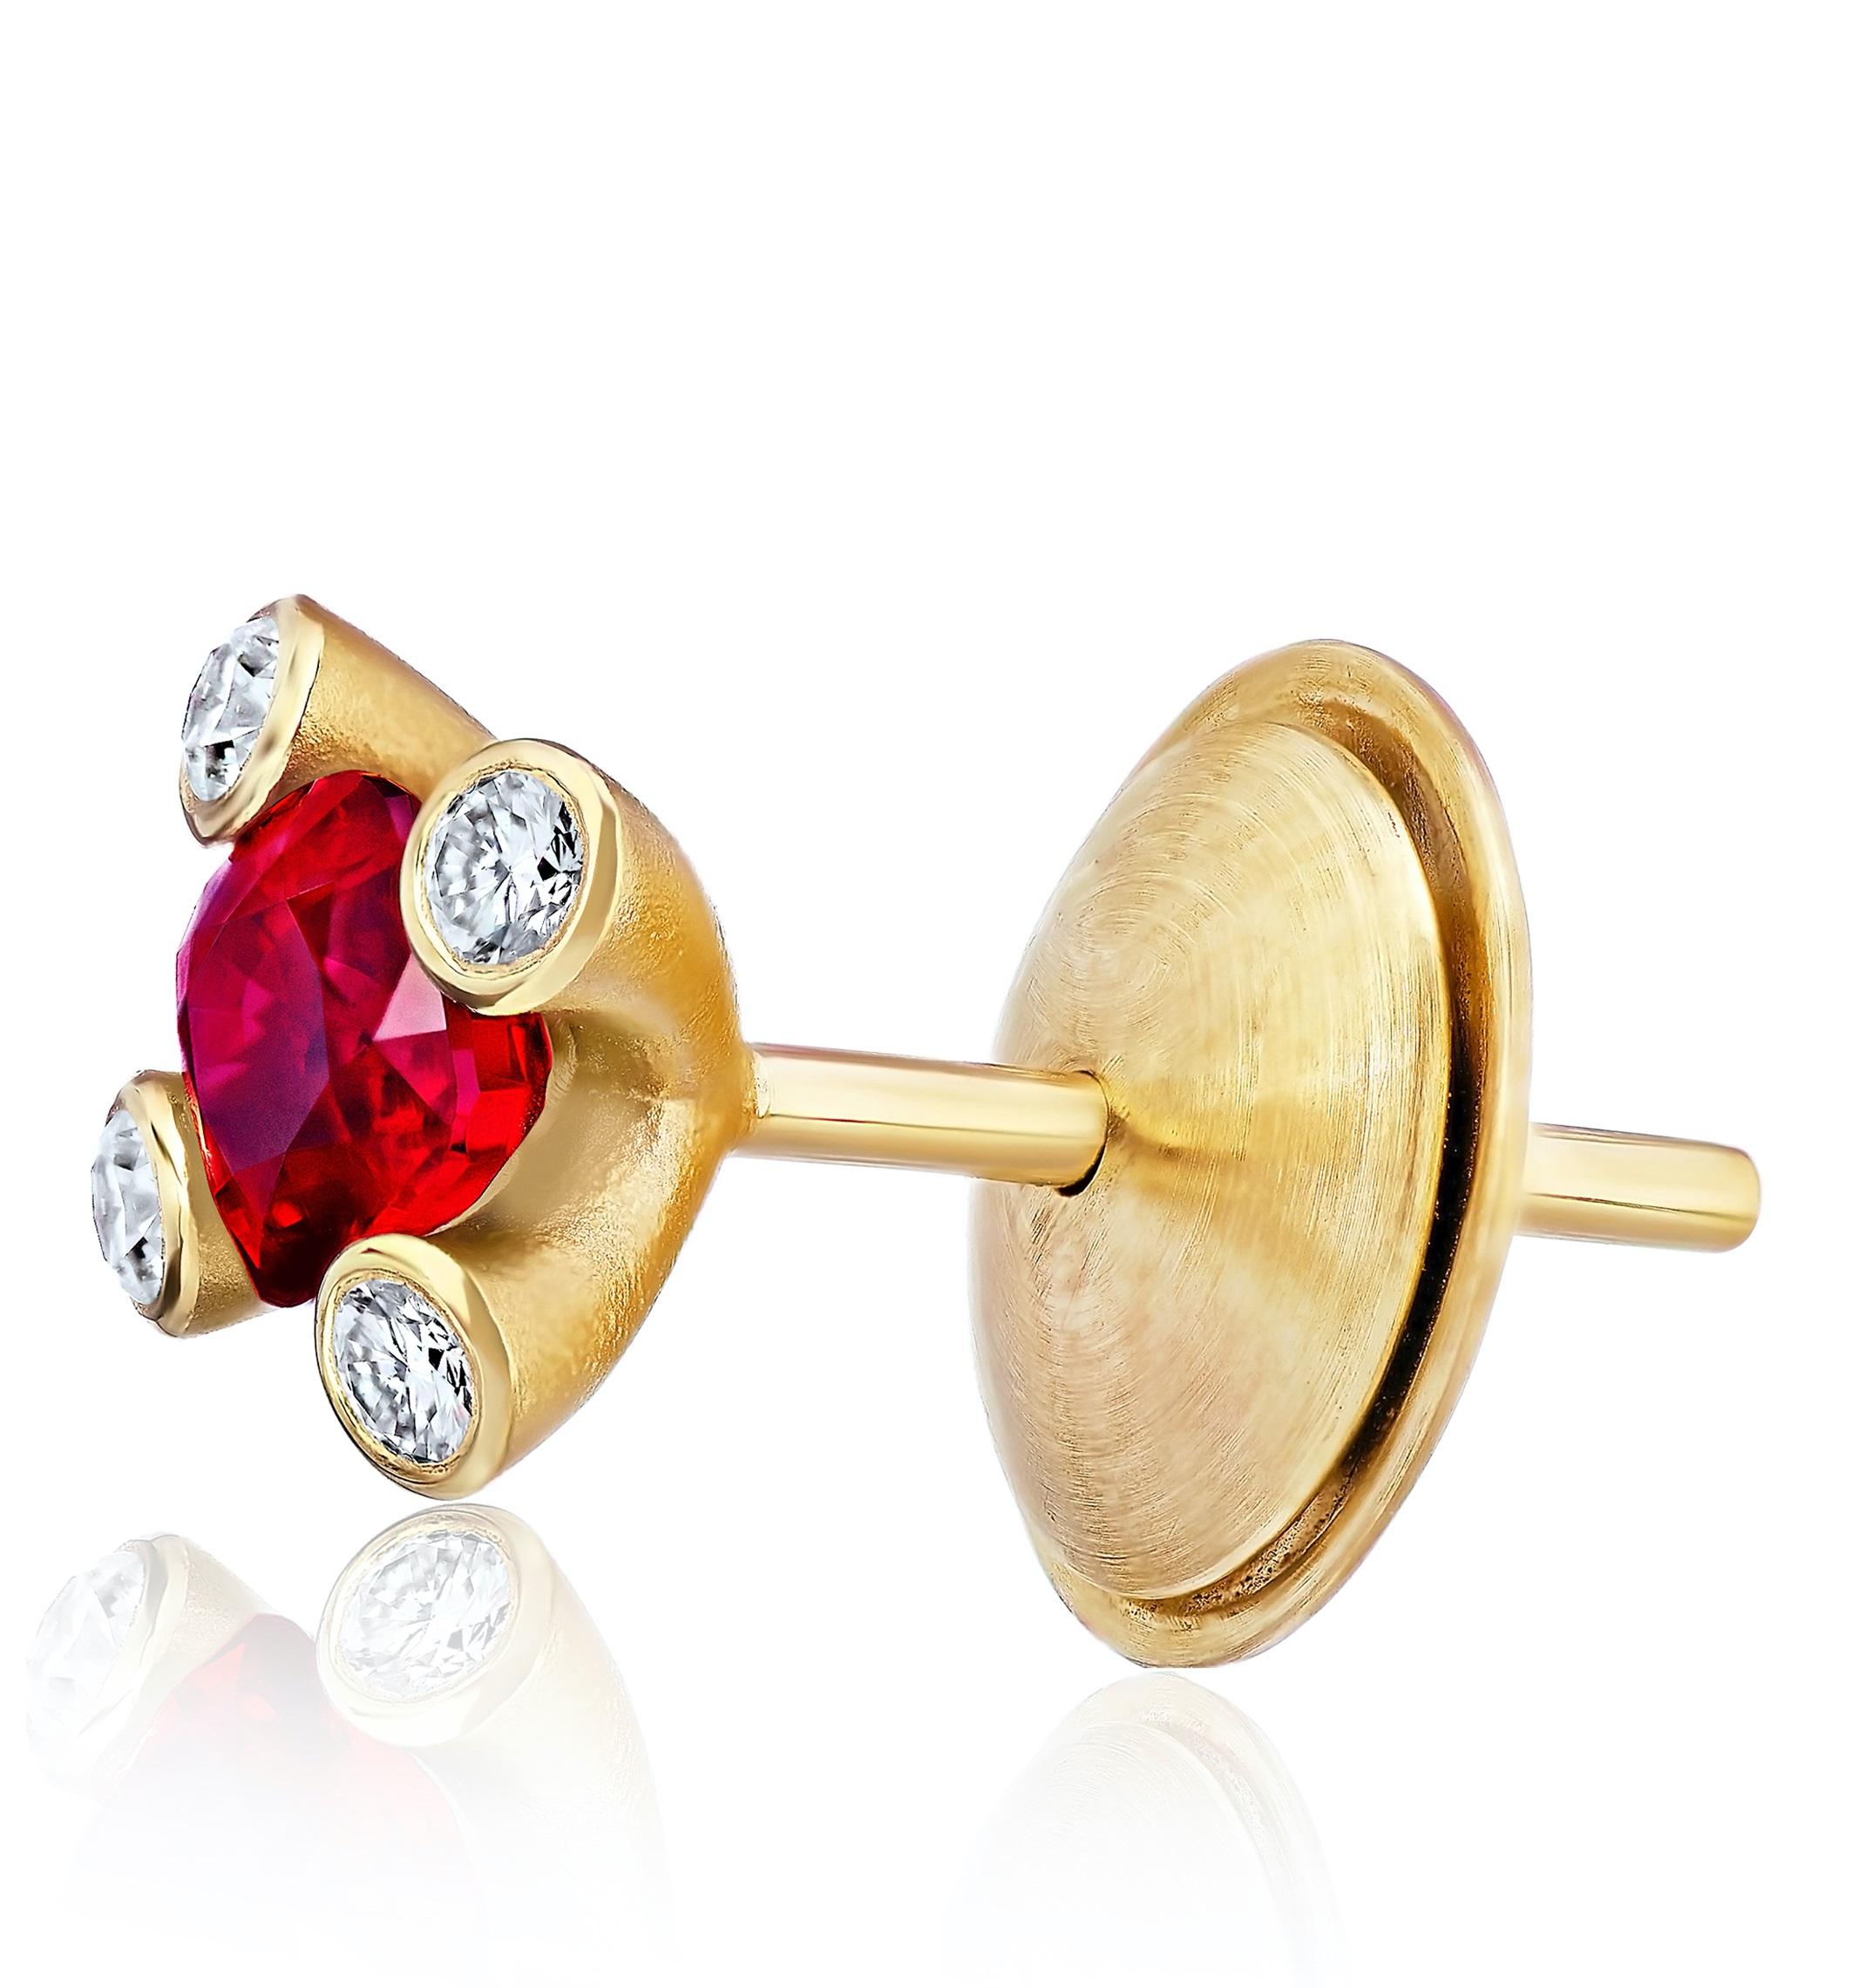 90 carat diamond earrings